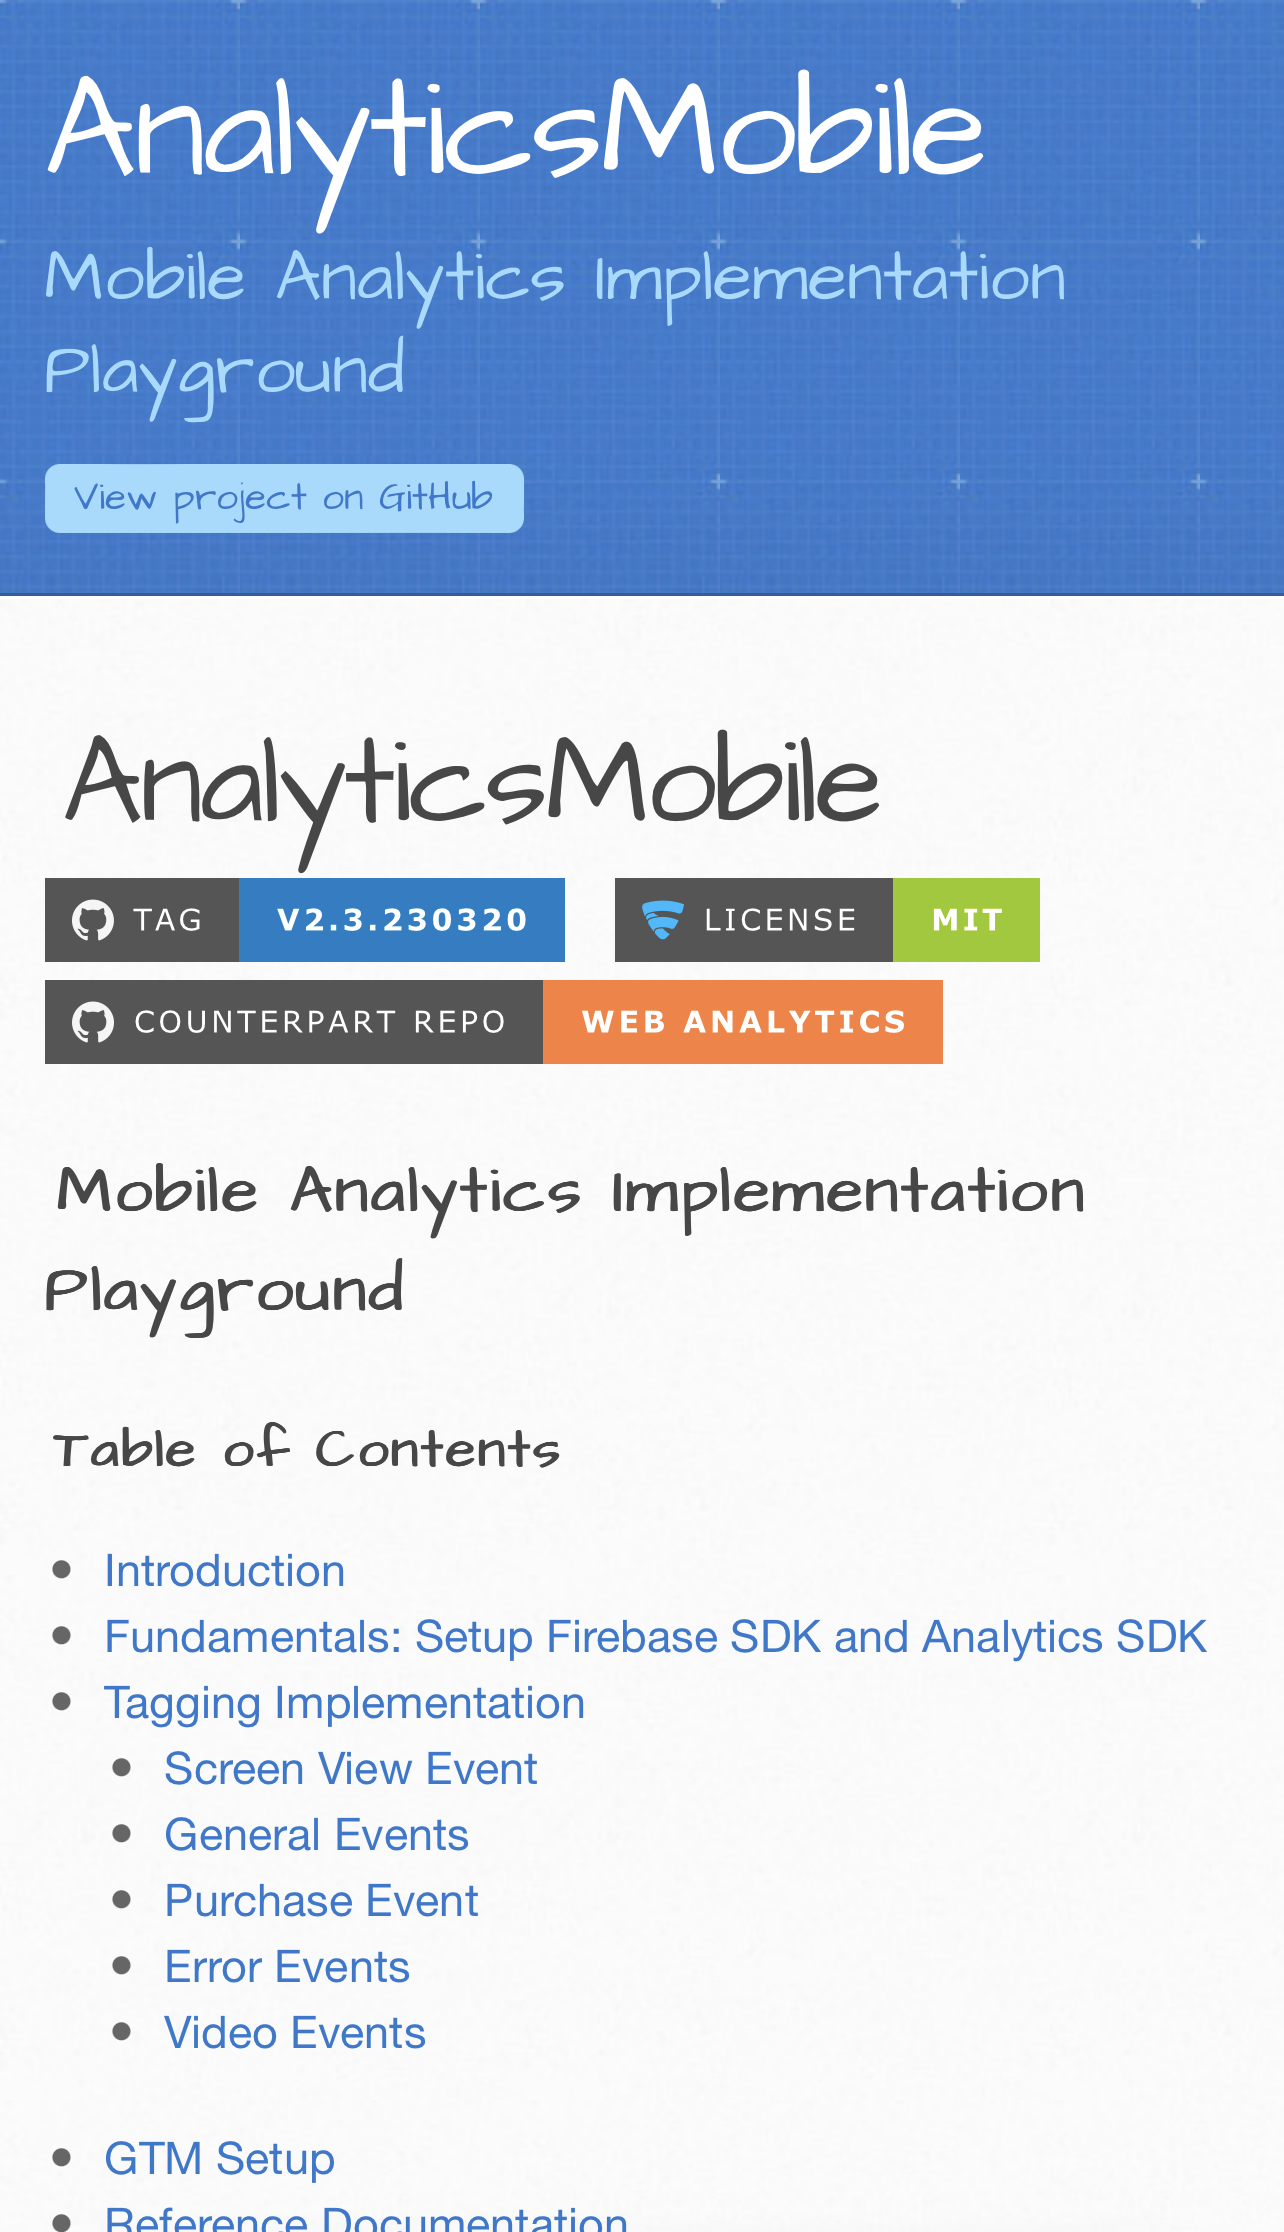 Mobile Analytics Implementation